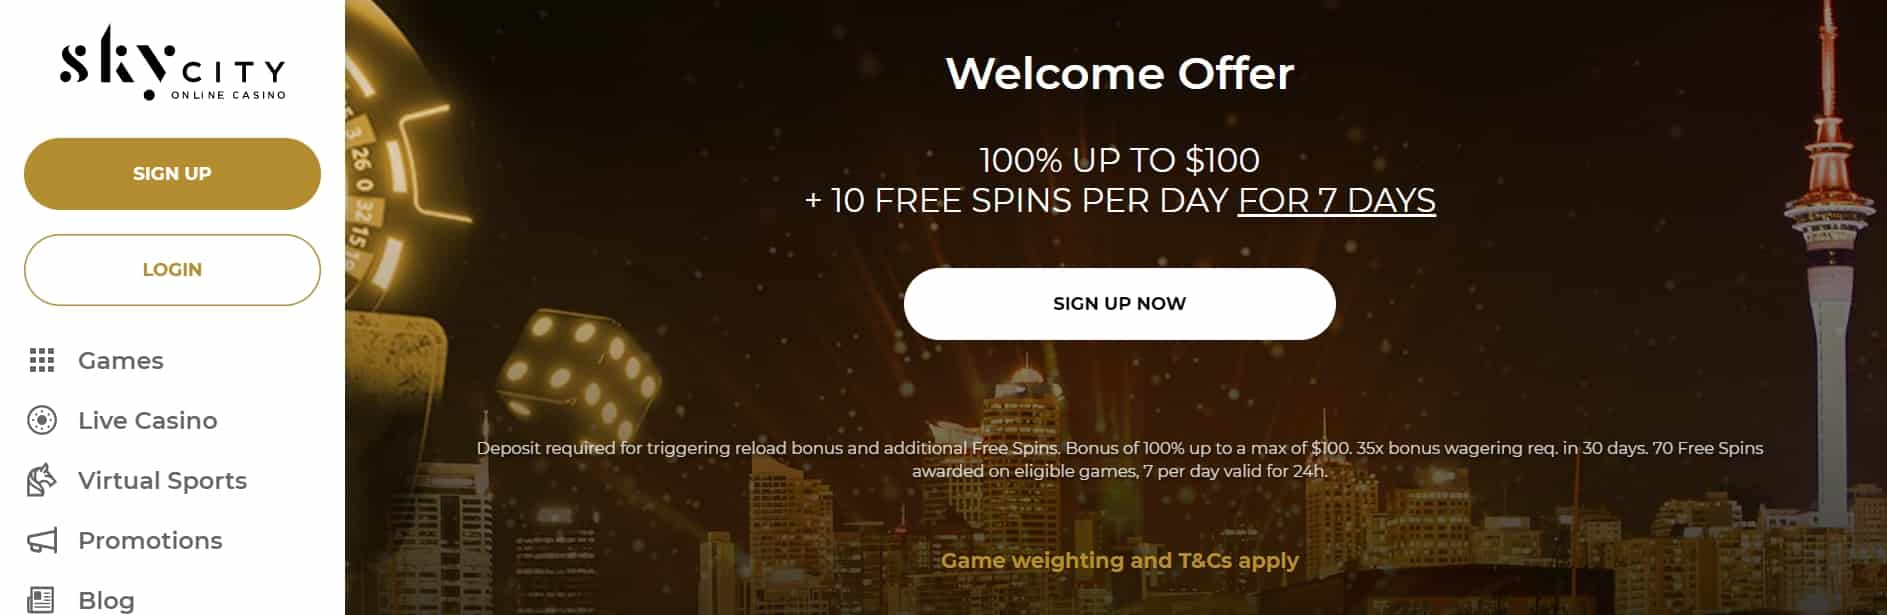 SkyCity Online casino sign up